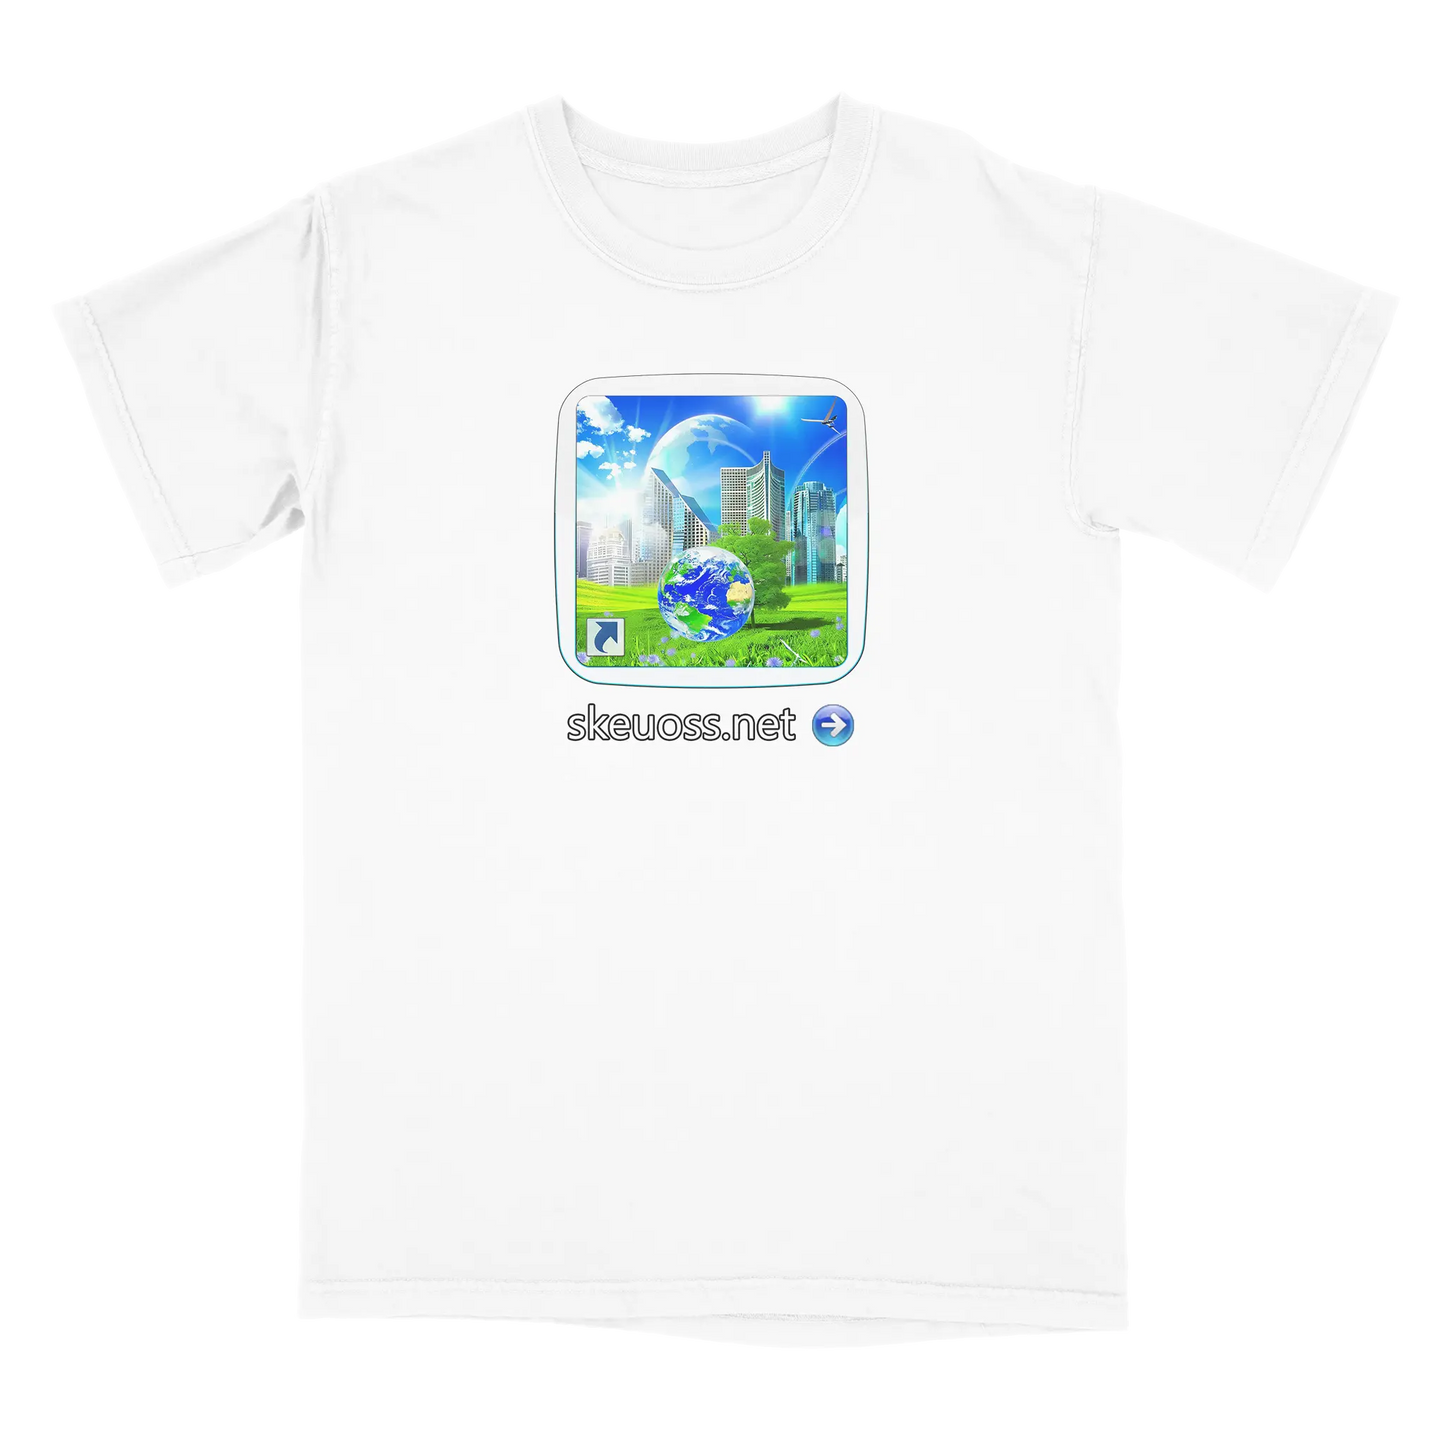 Frutiger Aero T-shirt - User Login Collection - User 399